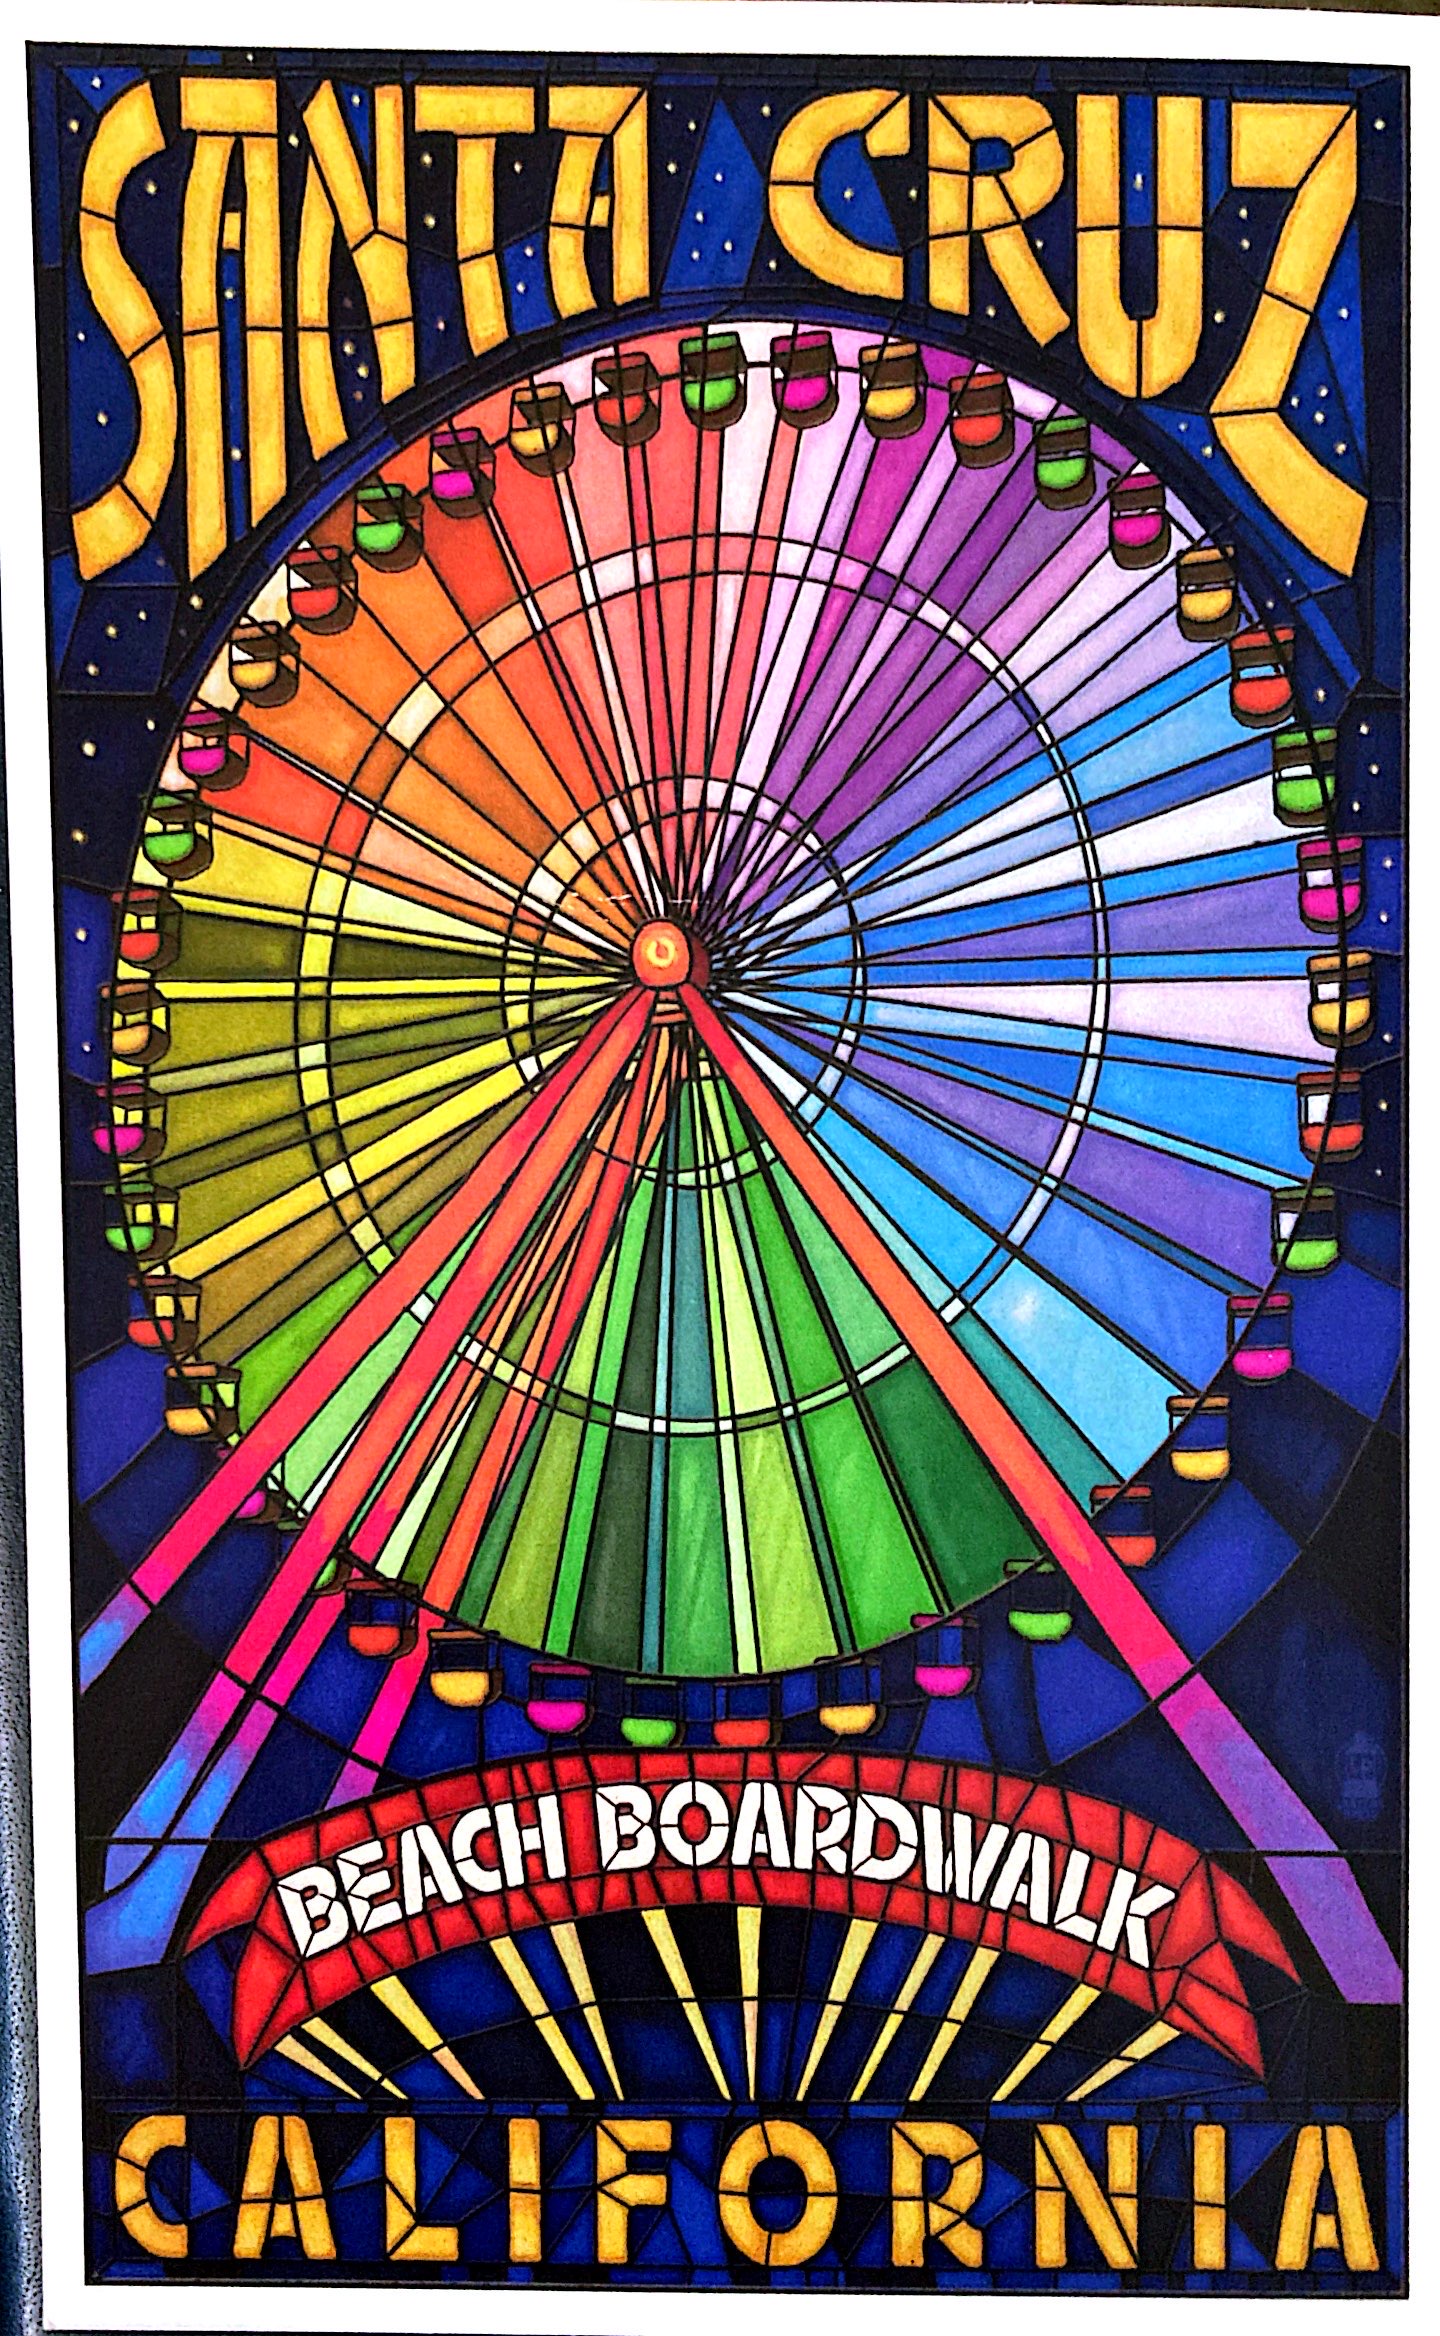 An illustration of the ferris wheel of the Santa Cruz boardwalk